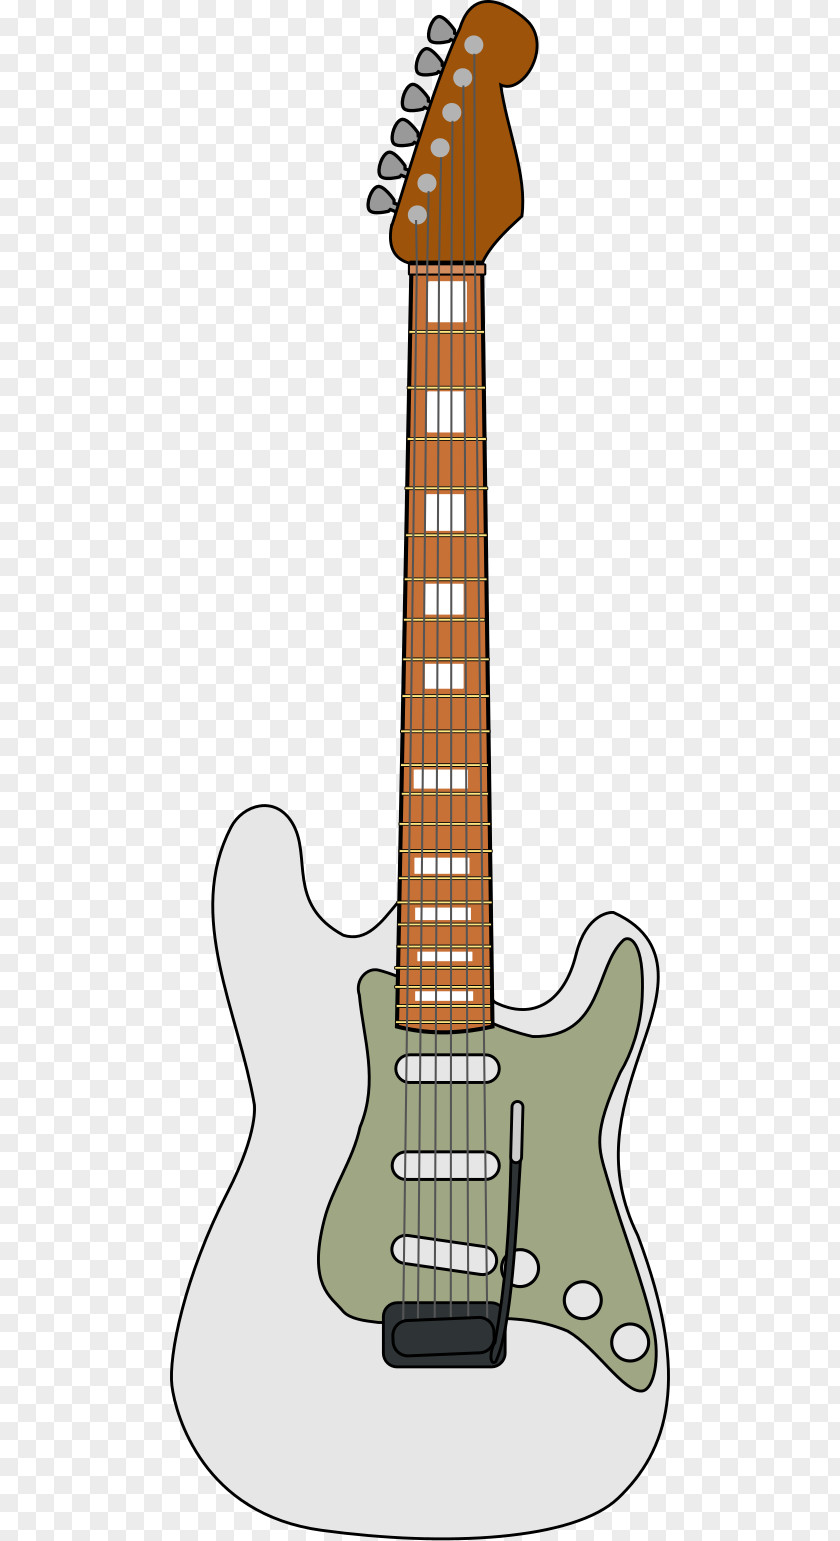 Piemaster Fender Stratocaster Telecaster Guitar Clip Art PNG